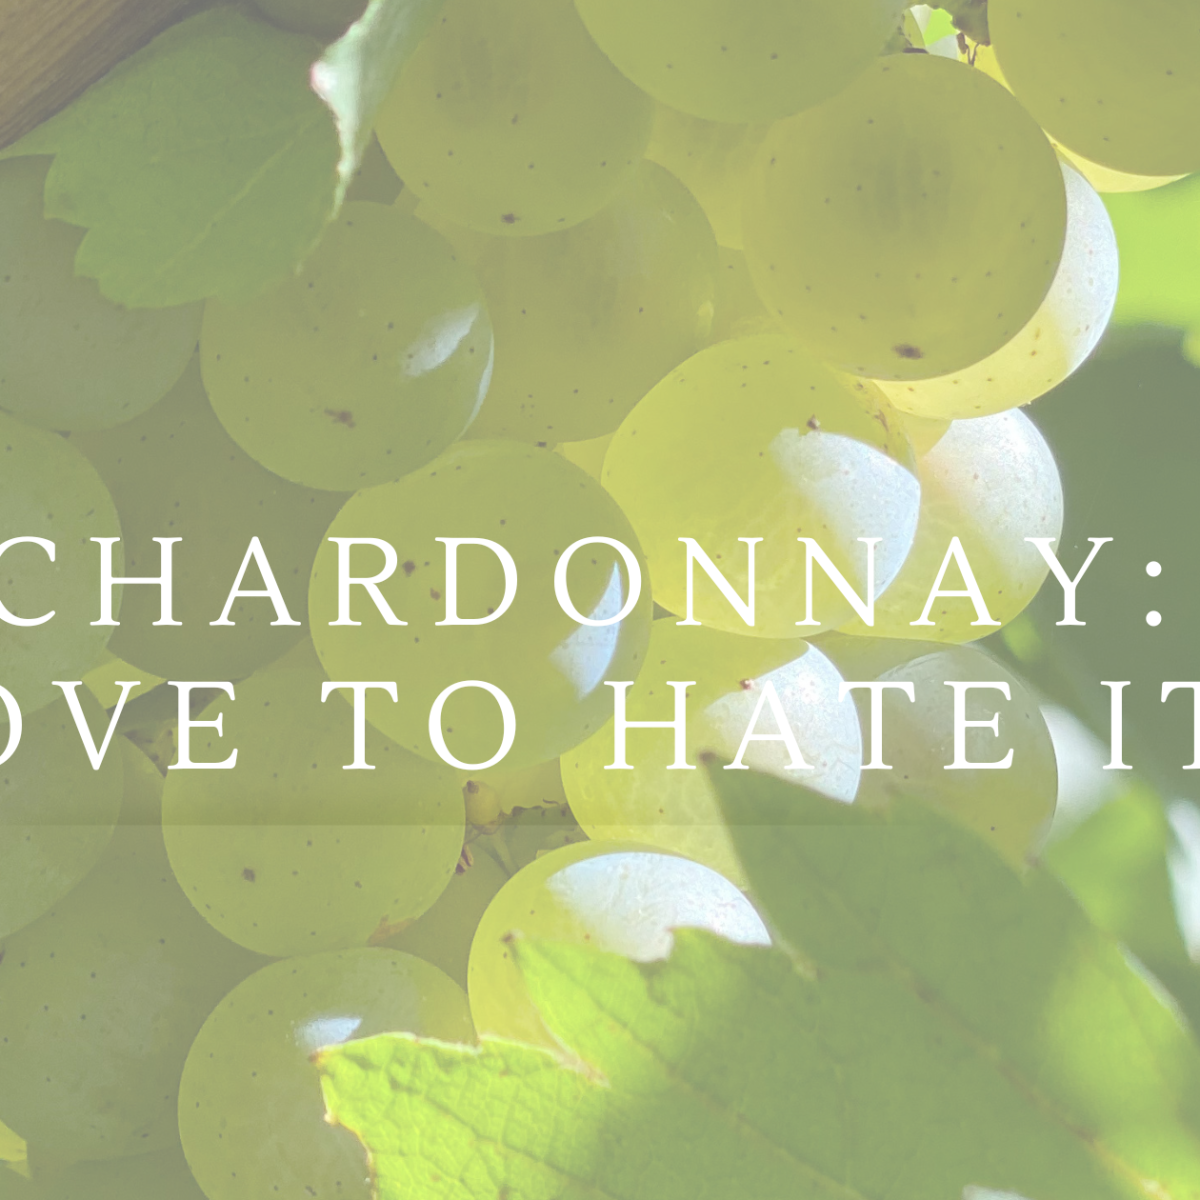 Chardonnay: Love it or hate it?